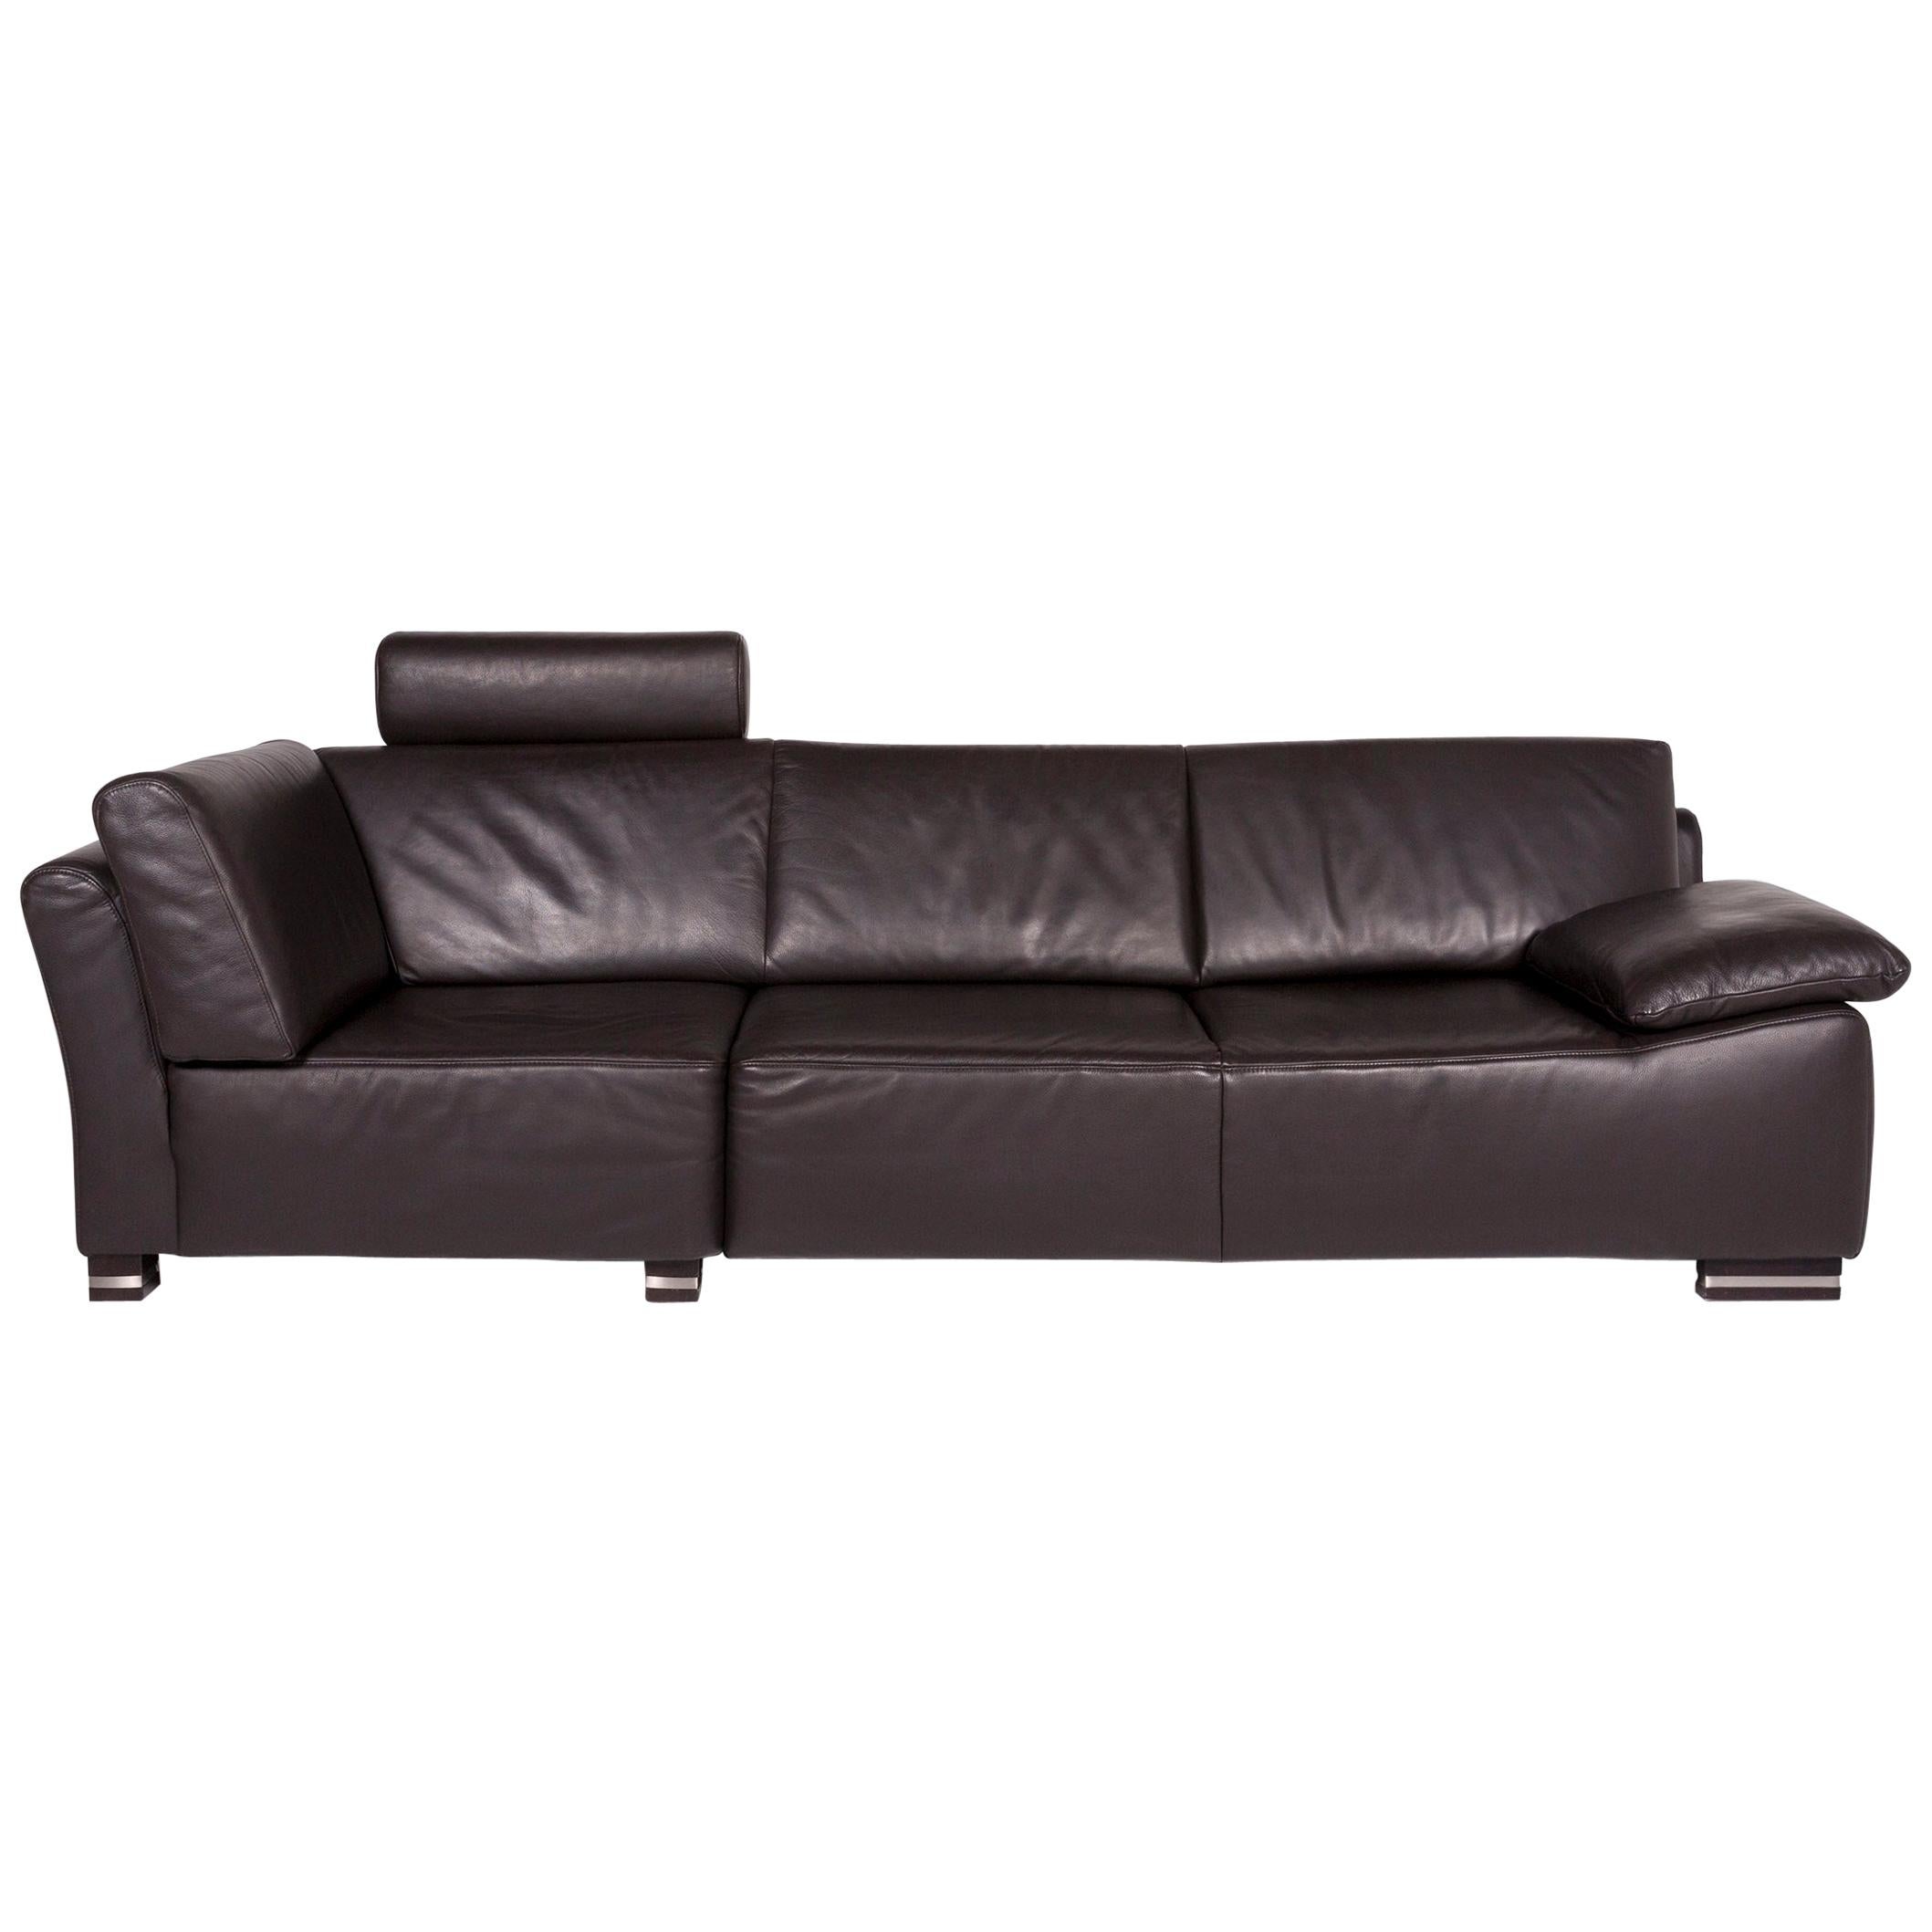 Ewald Schillig Bentley Leather Sofa Brown Three-Seat Couch